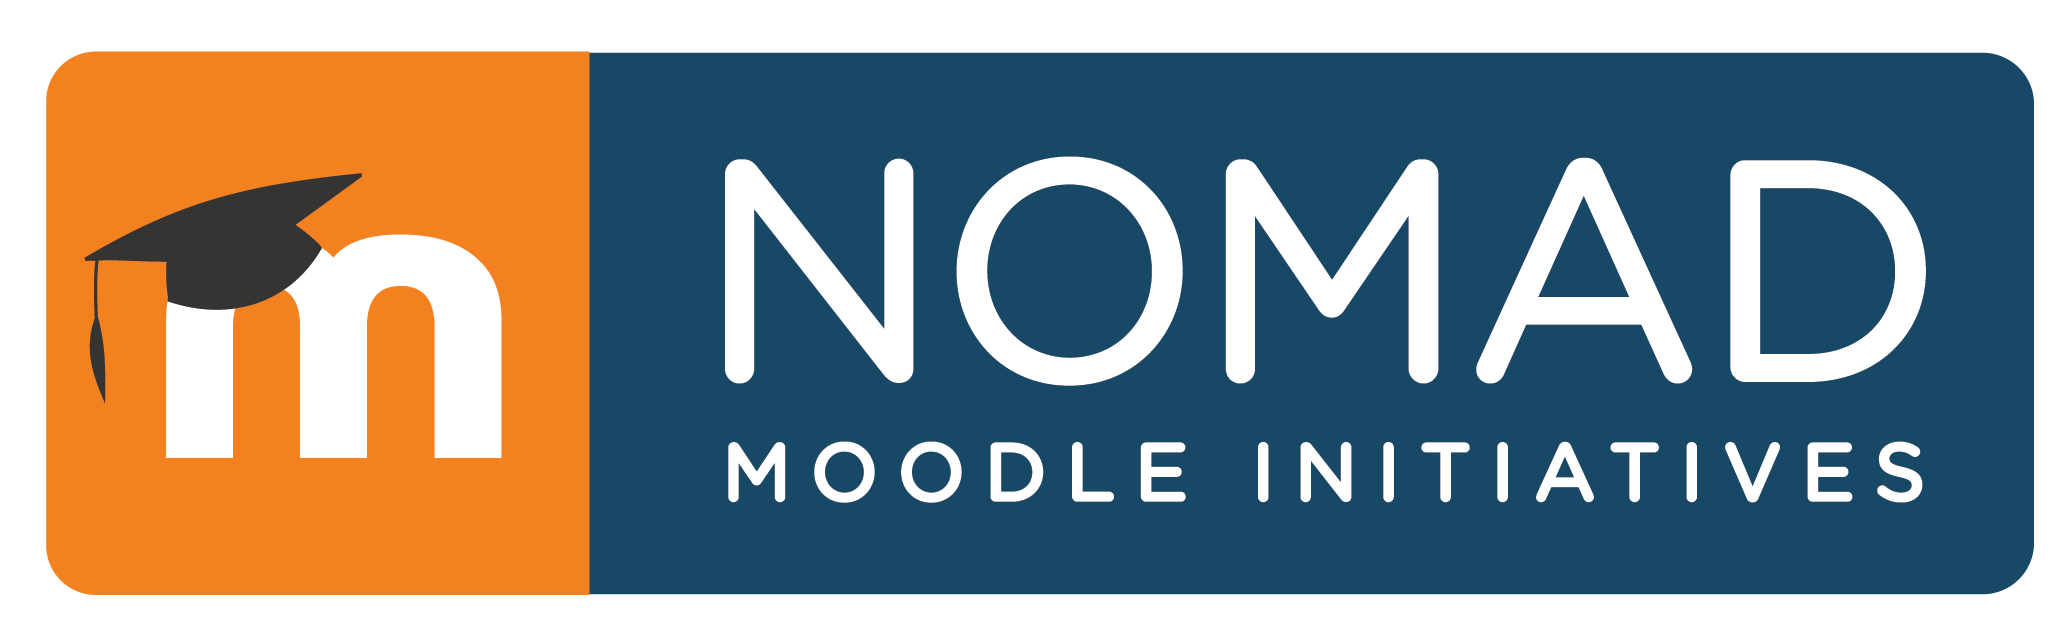 NomadMoodleInitiatives Logotipo principal CMYK